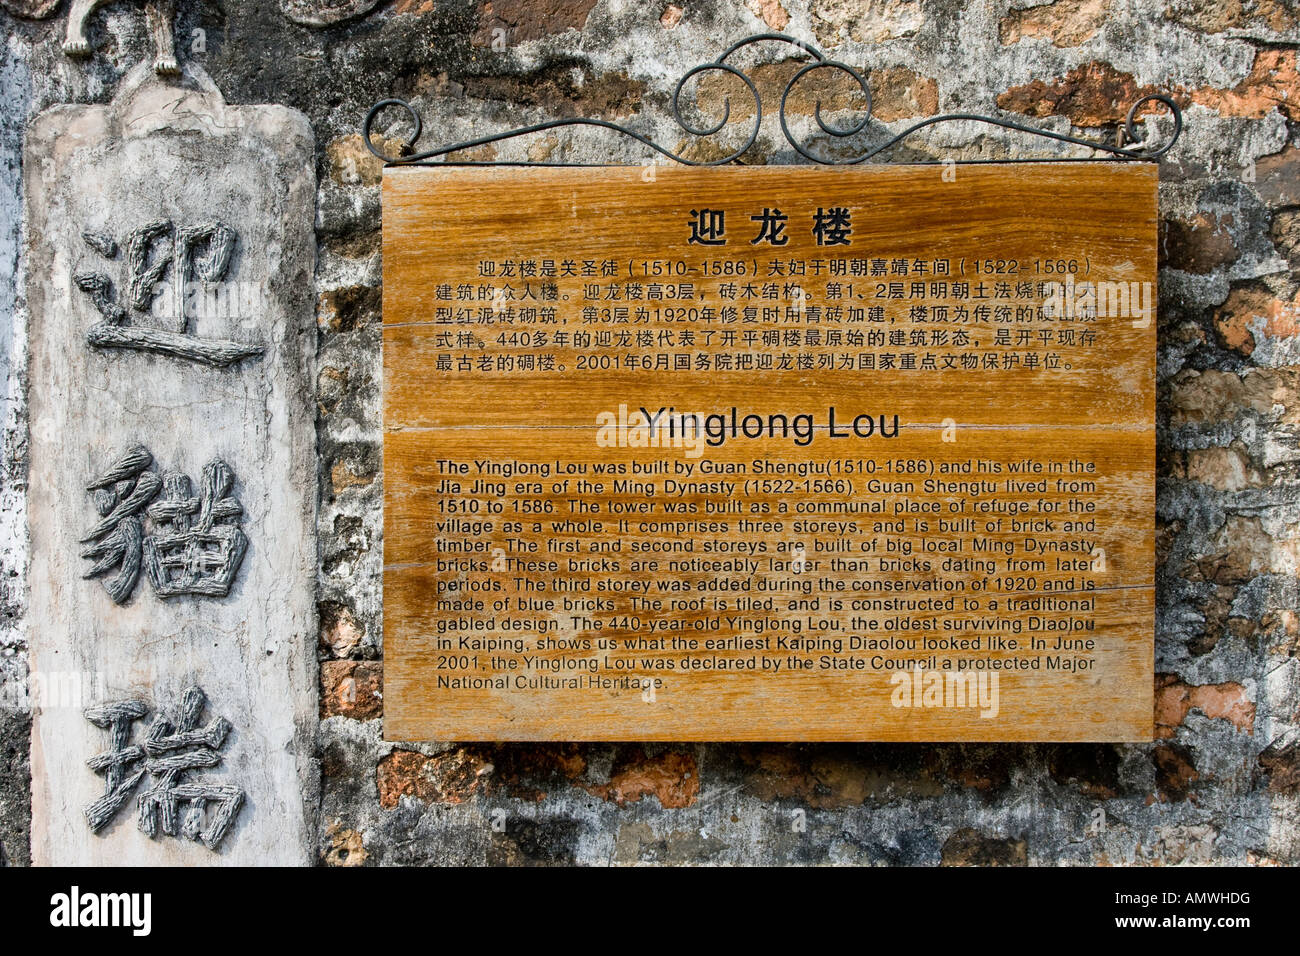 Yinglong Lou Tower Kaiping Diaolou Guangdong Province China Stock Photo